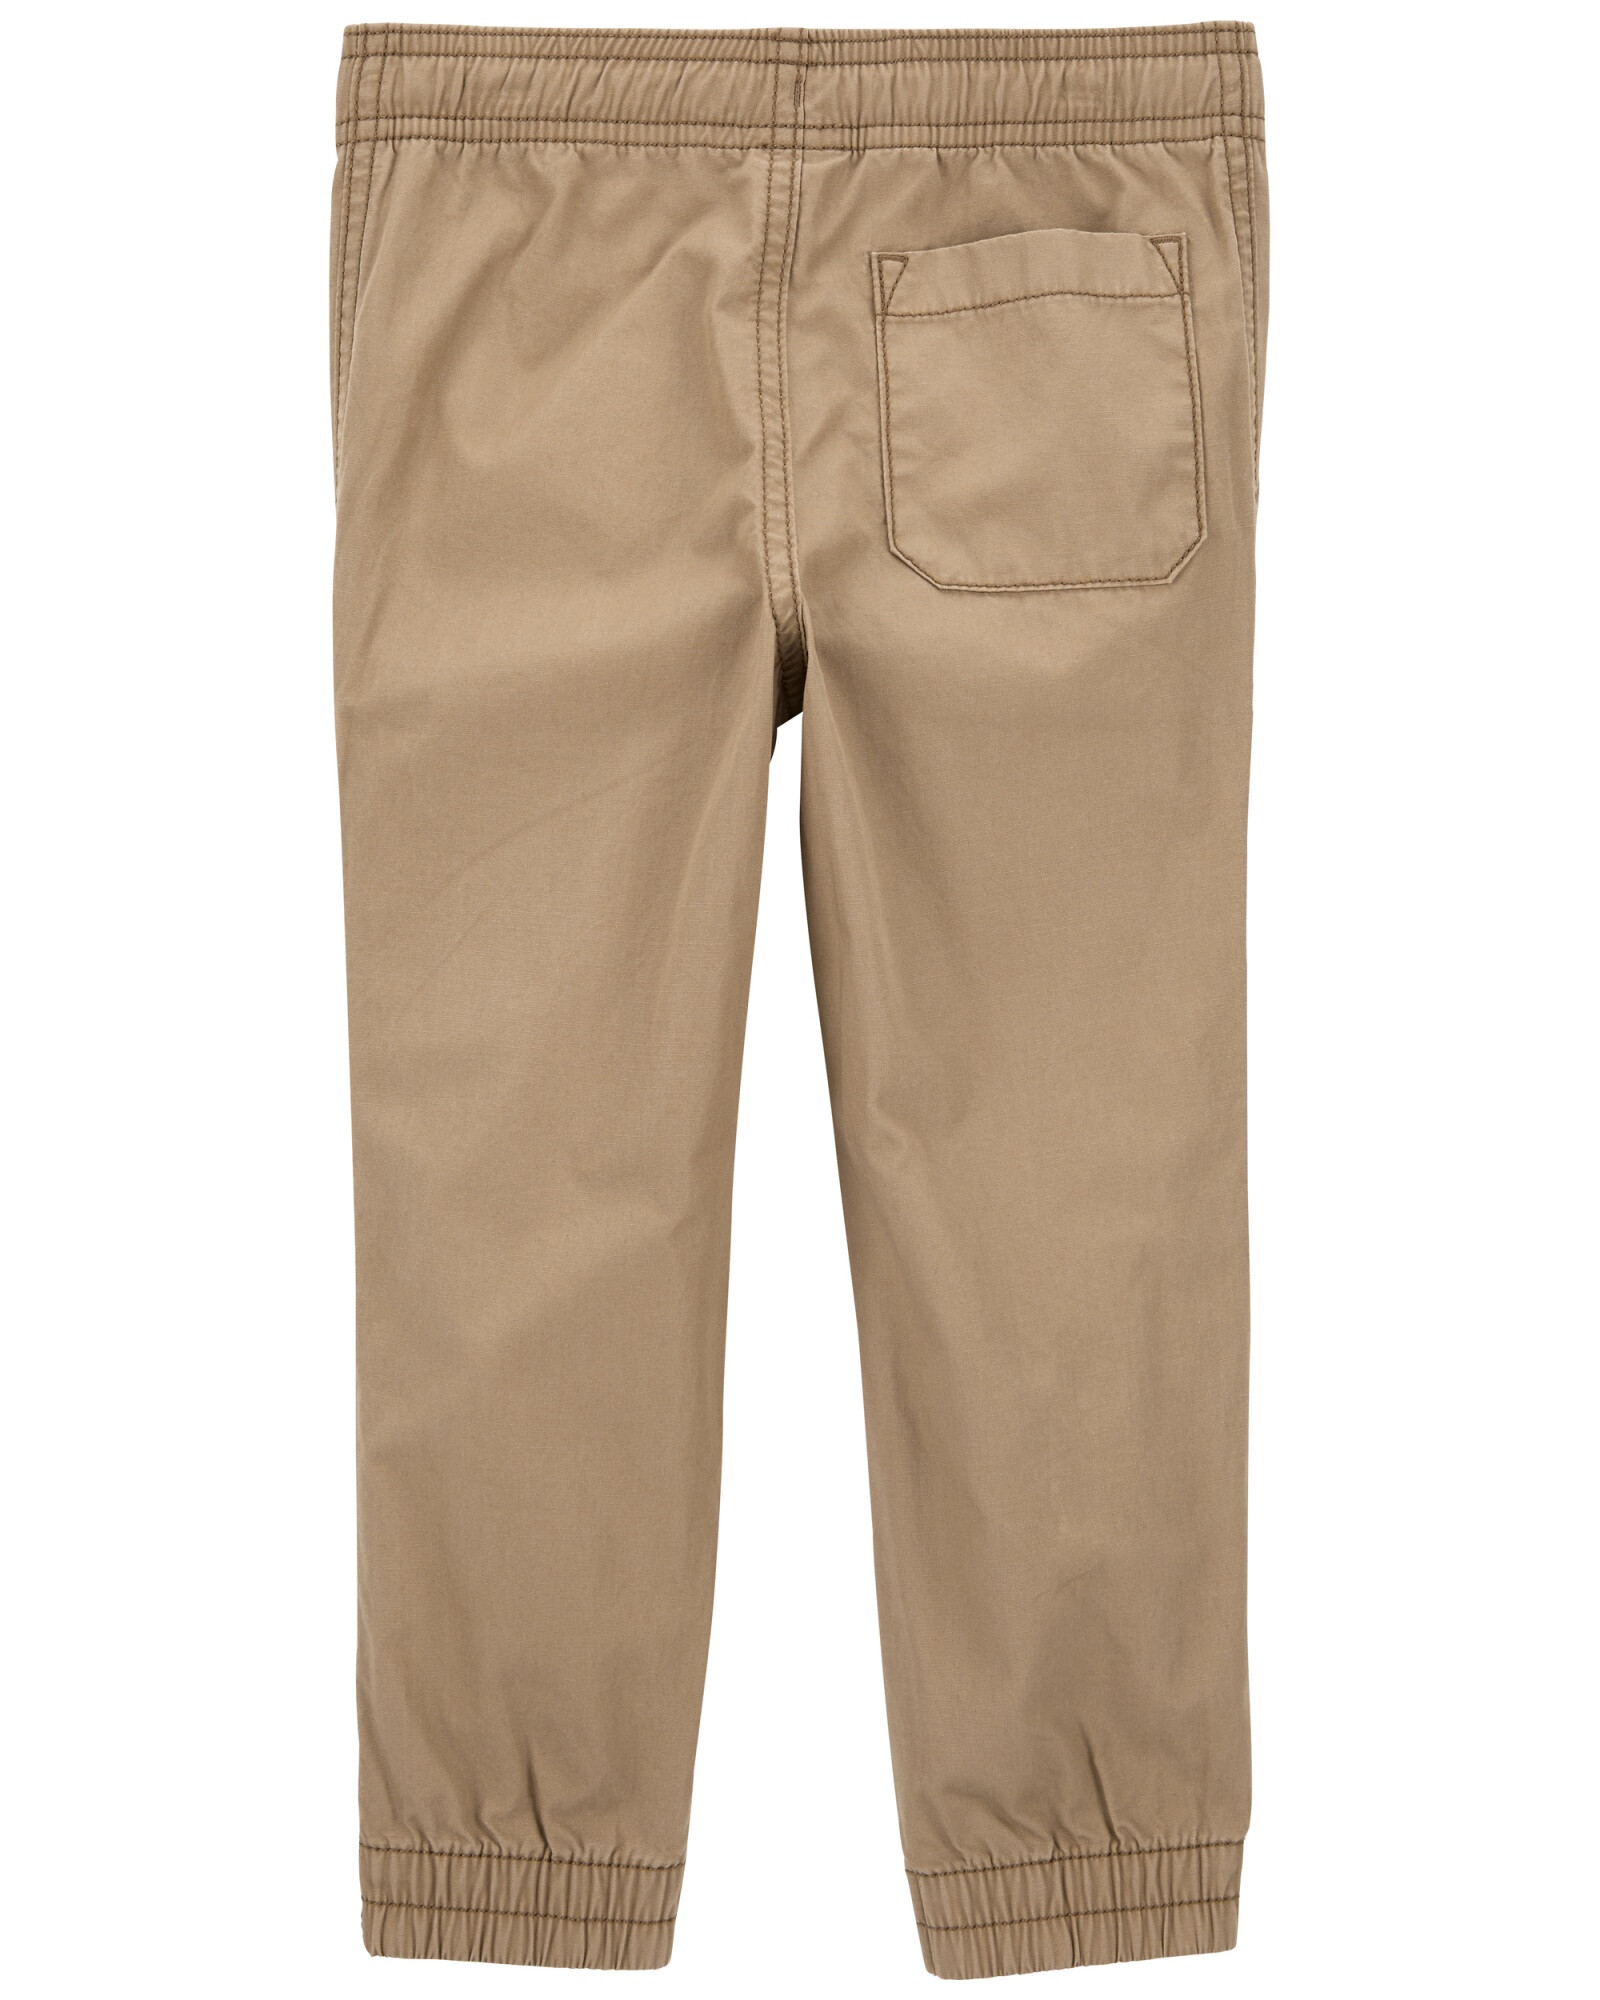 Pantalón de popelina khaki. Talles 2-5T Sin color